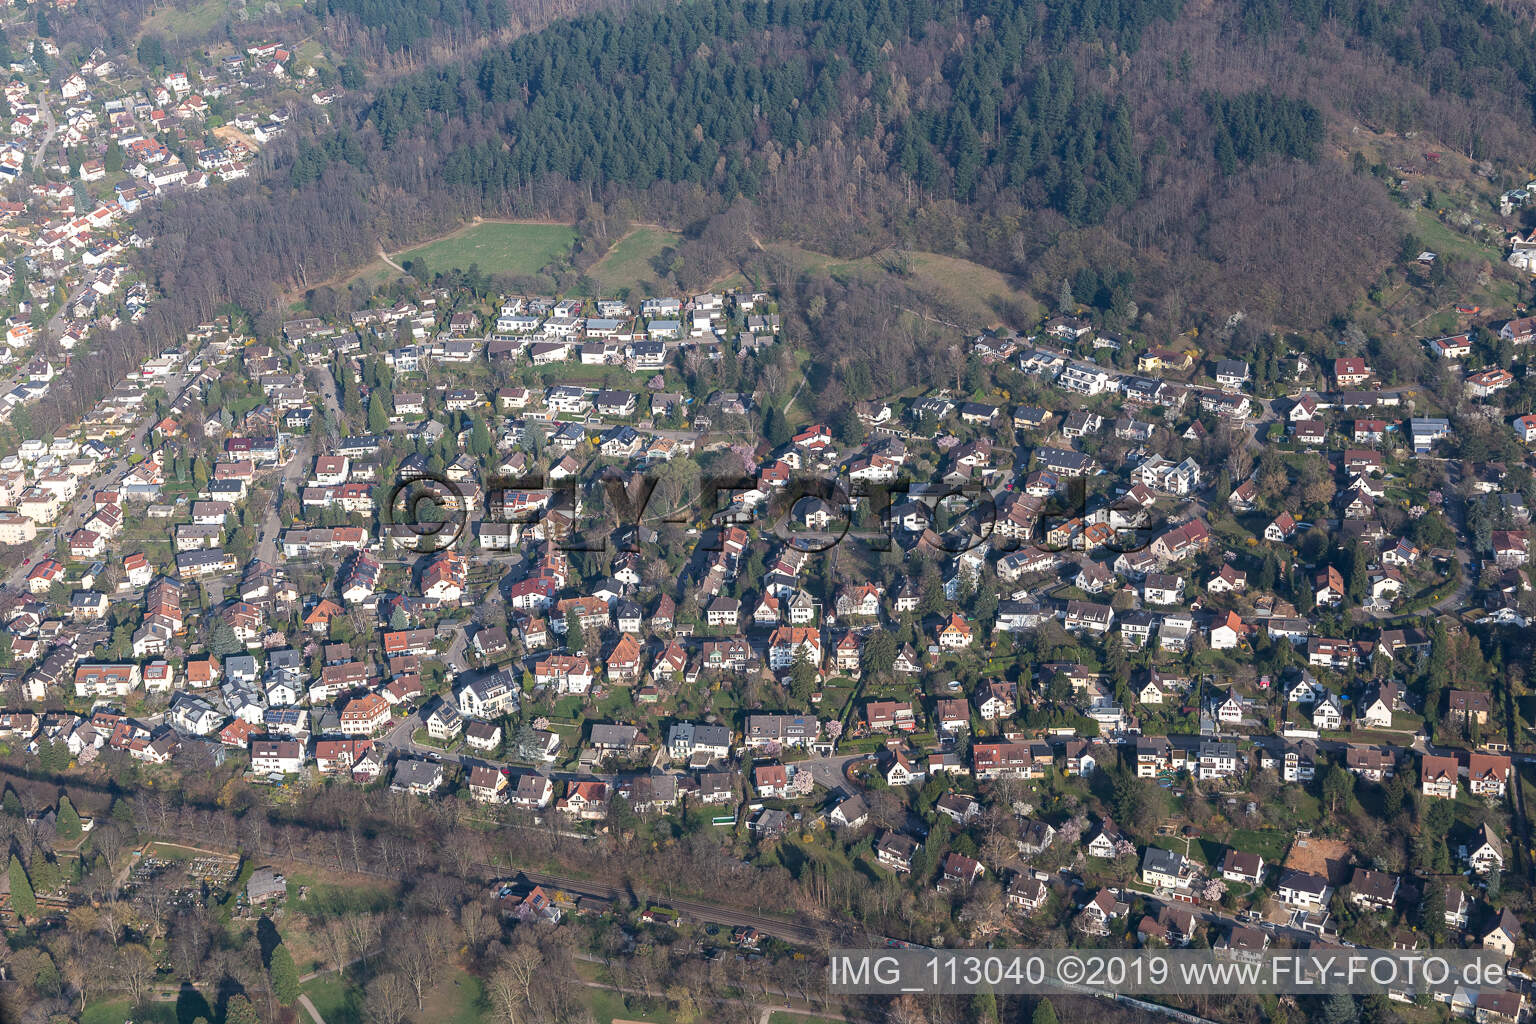 Vue aérienne de Quartier Zähringen in Freiburg im Breisgau dans le département Bade-Wurtemberg, Allemagne